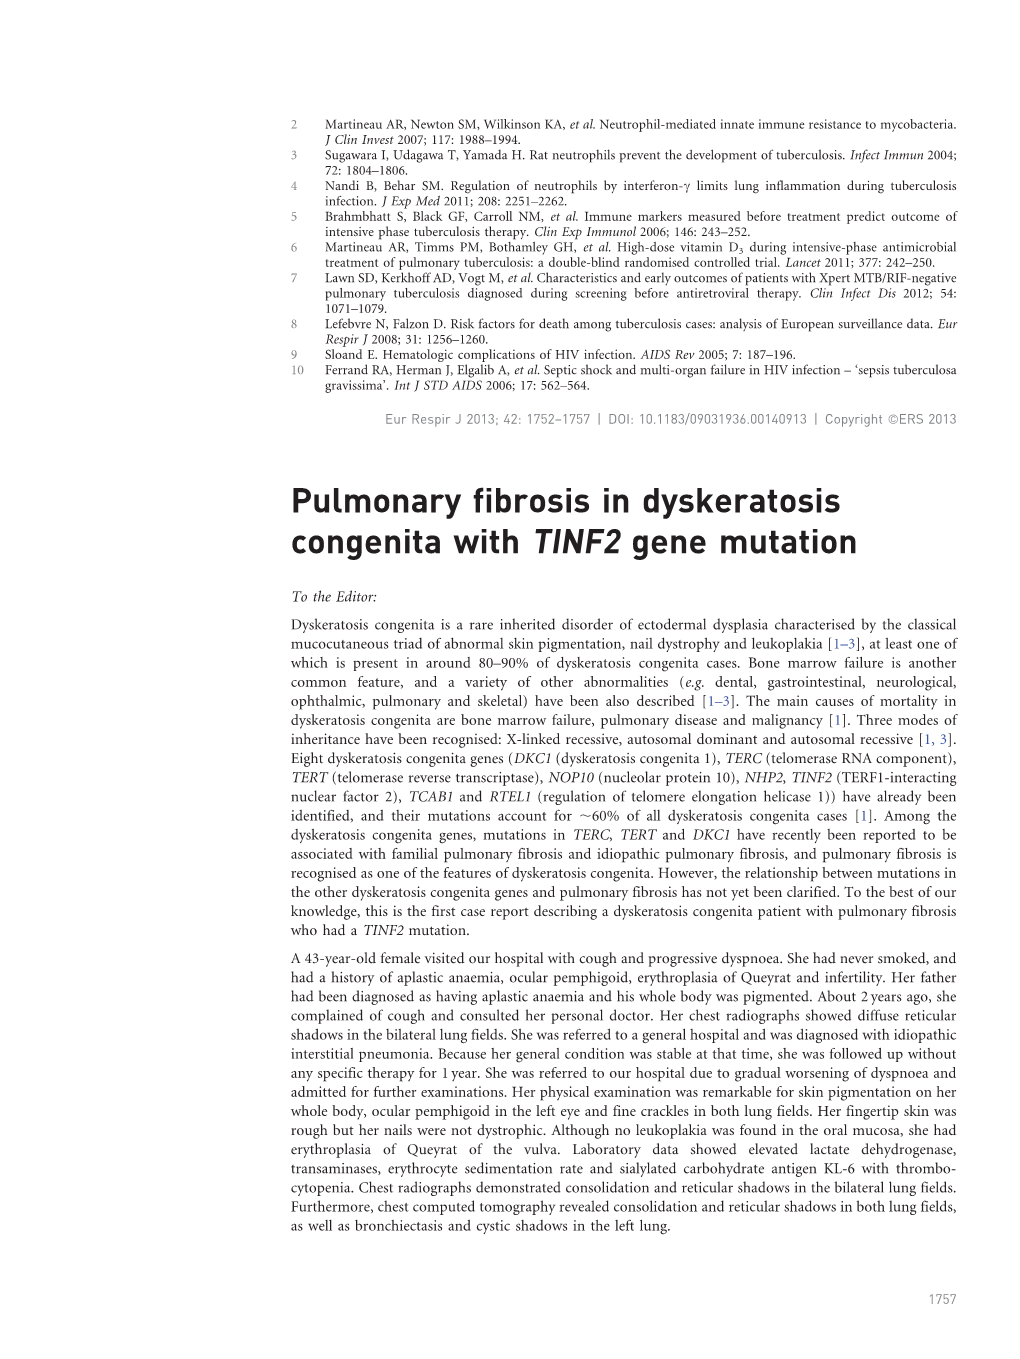 Pulmonary Fibrosis in Dyskeratosis Congenita with TINF2 Gene Mutation